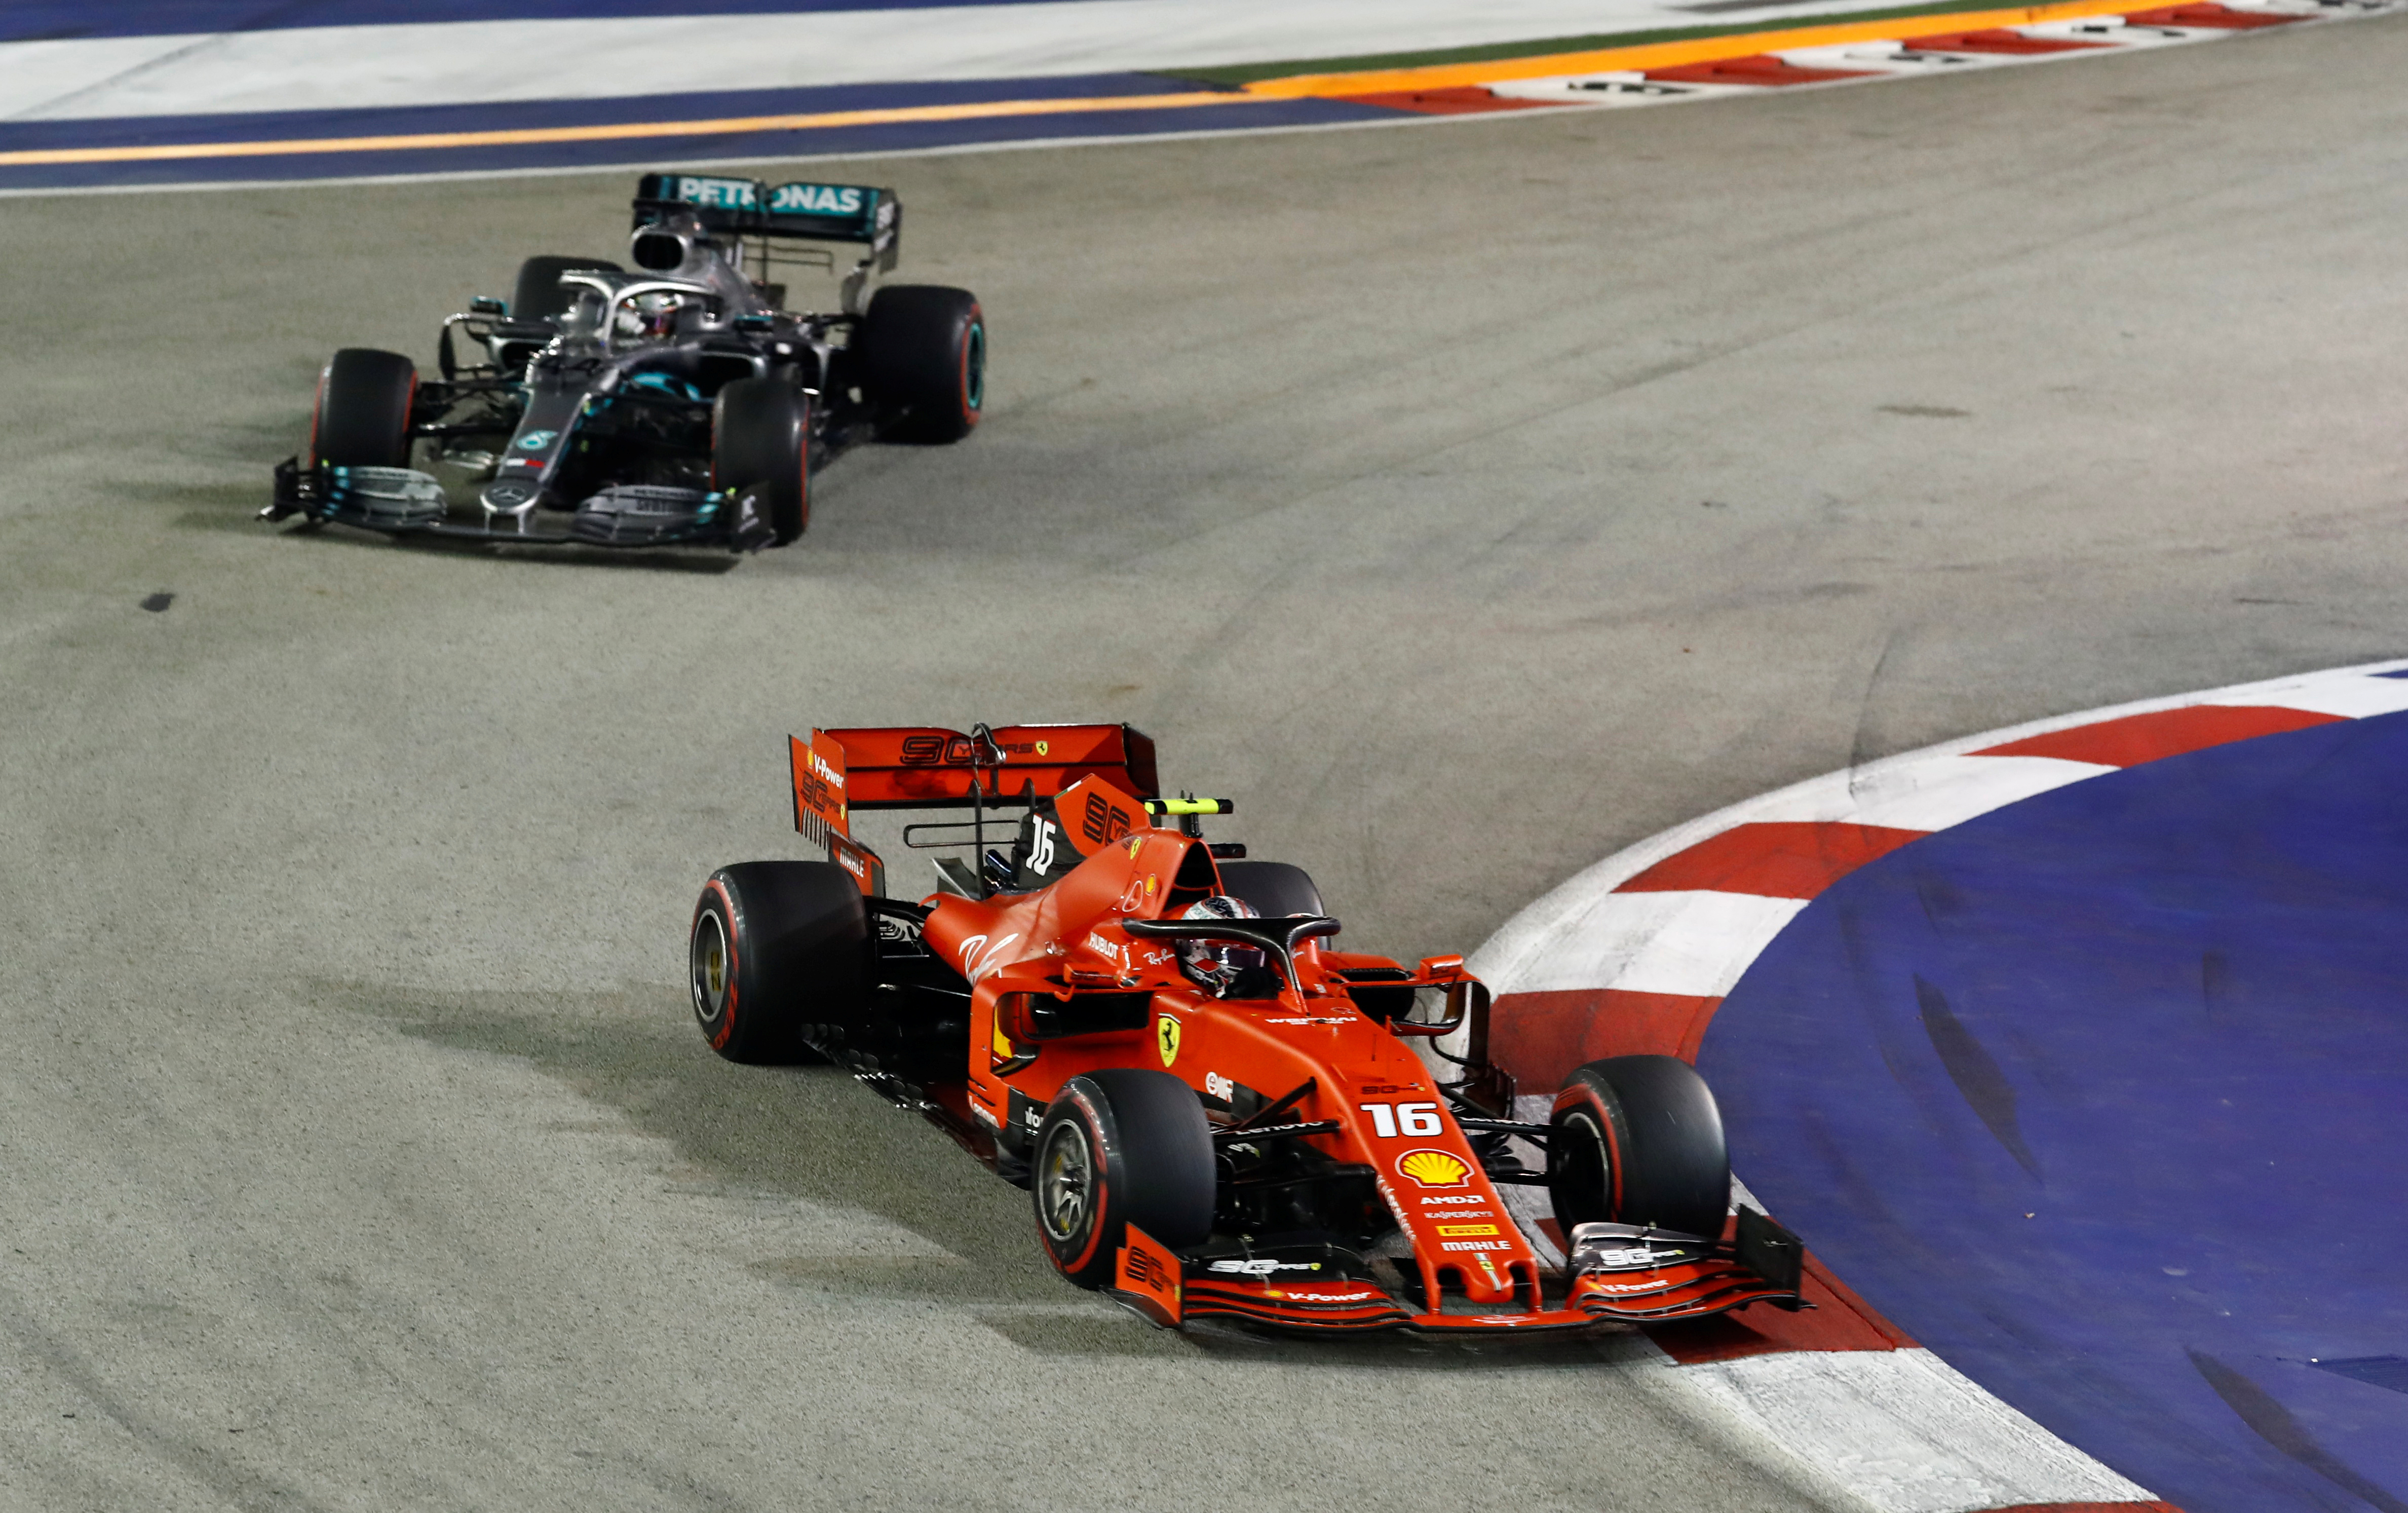 F1 race